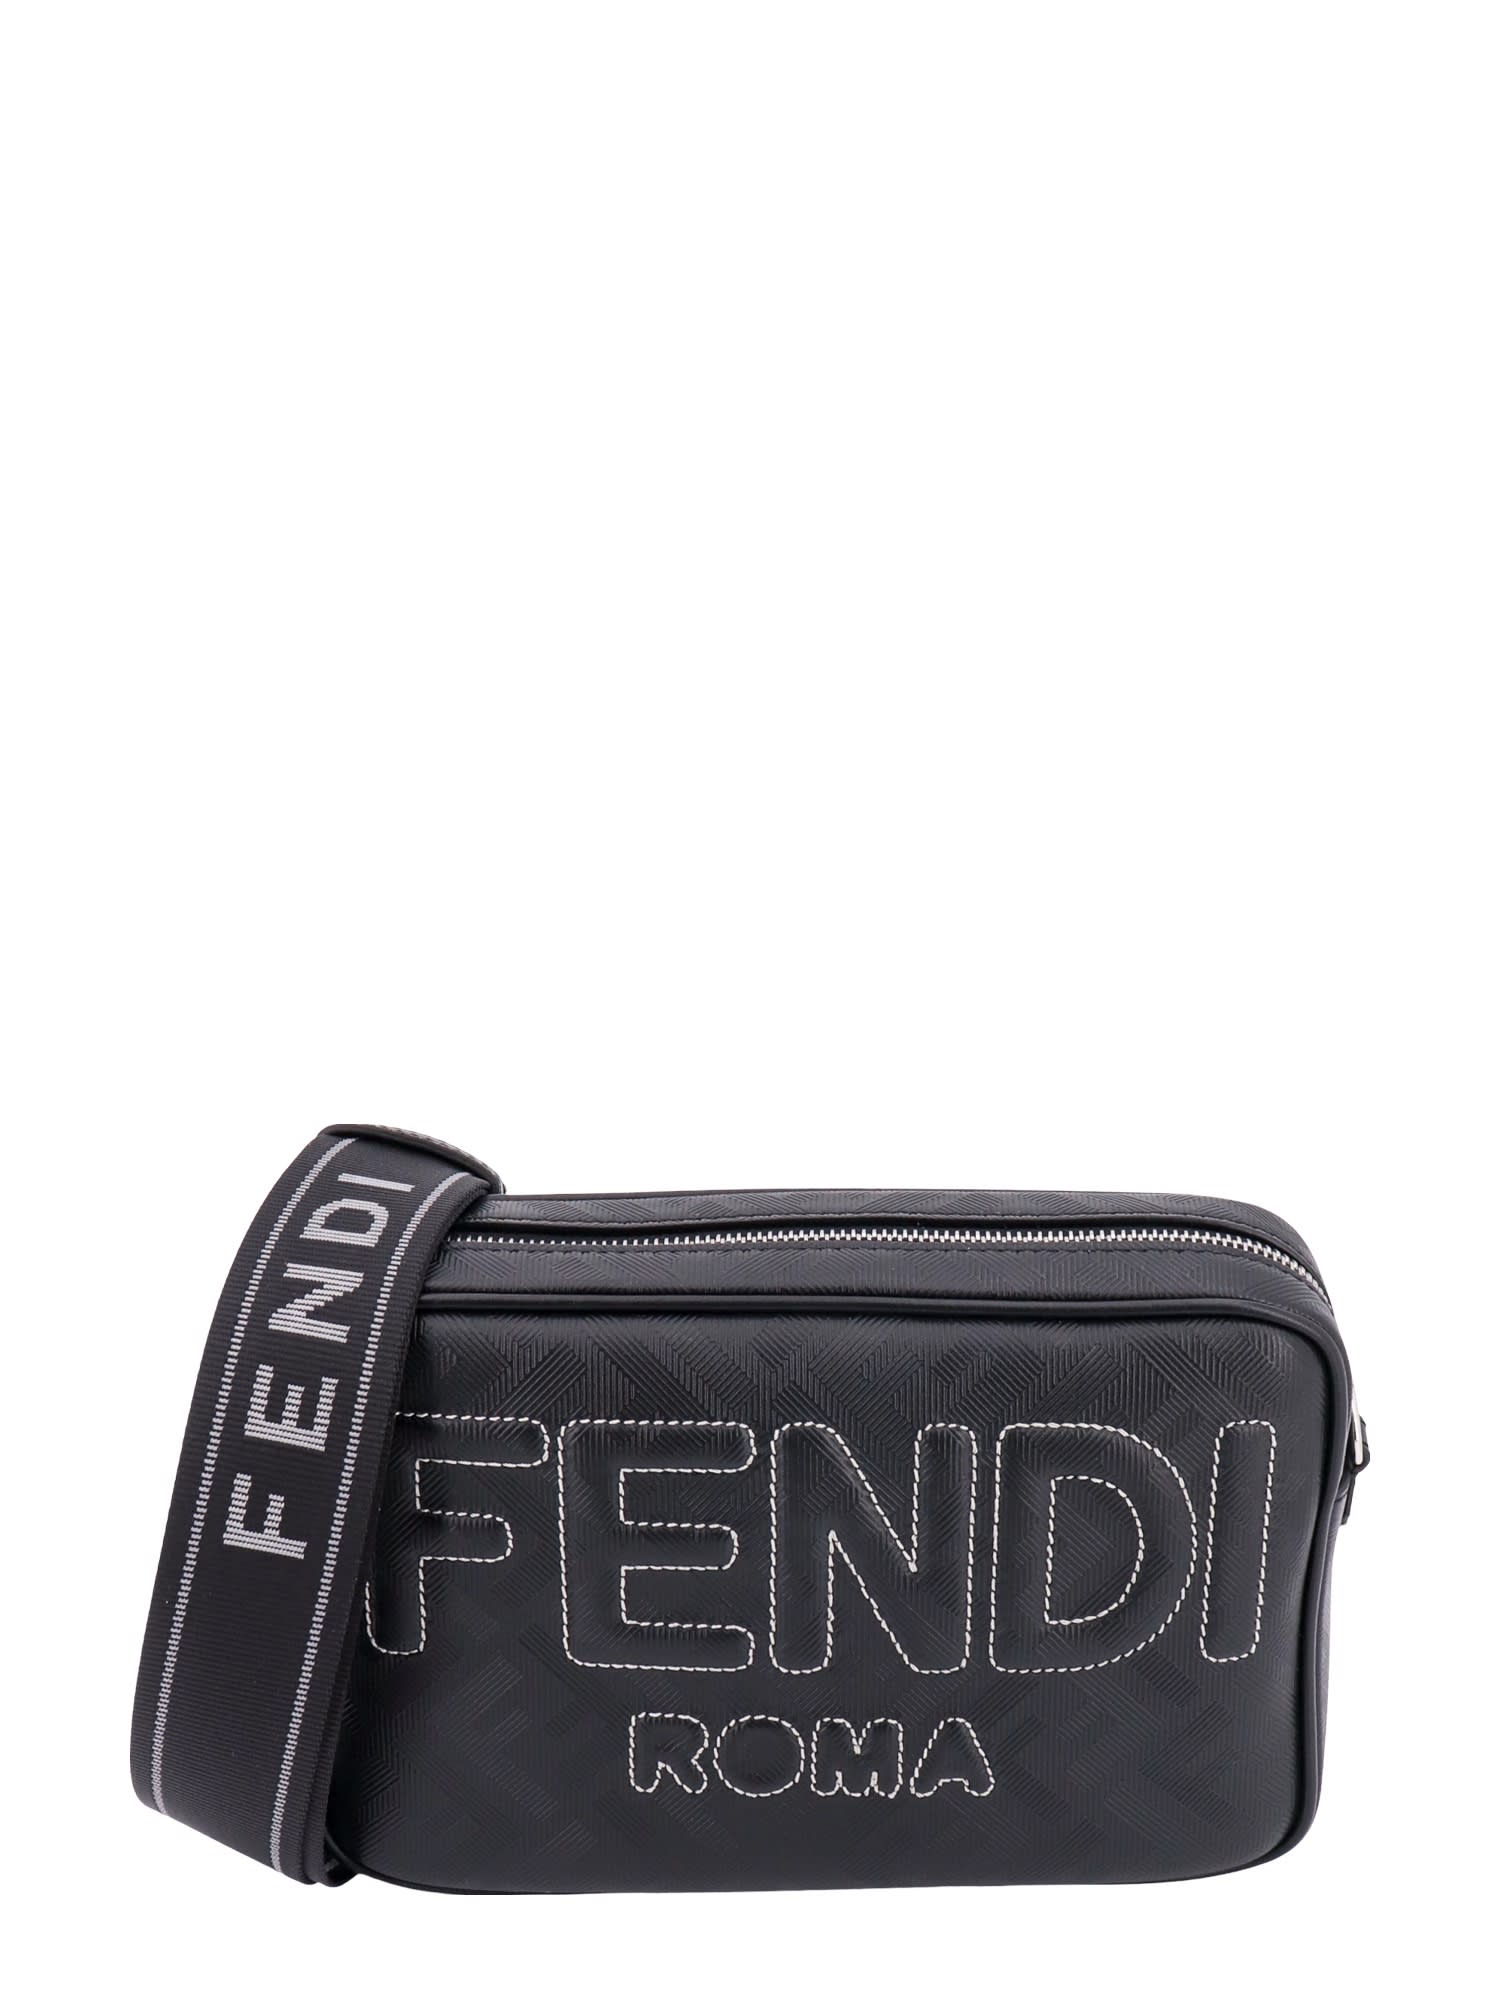 FENDI FENDI SHADOW SHOULDER BAG